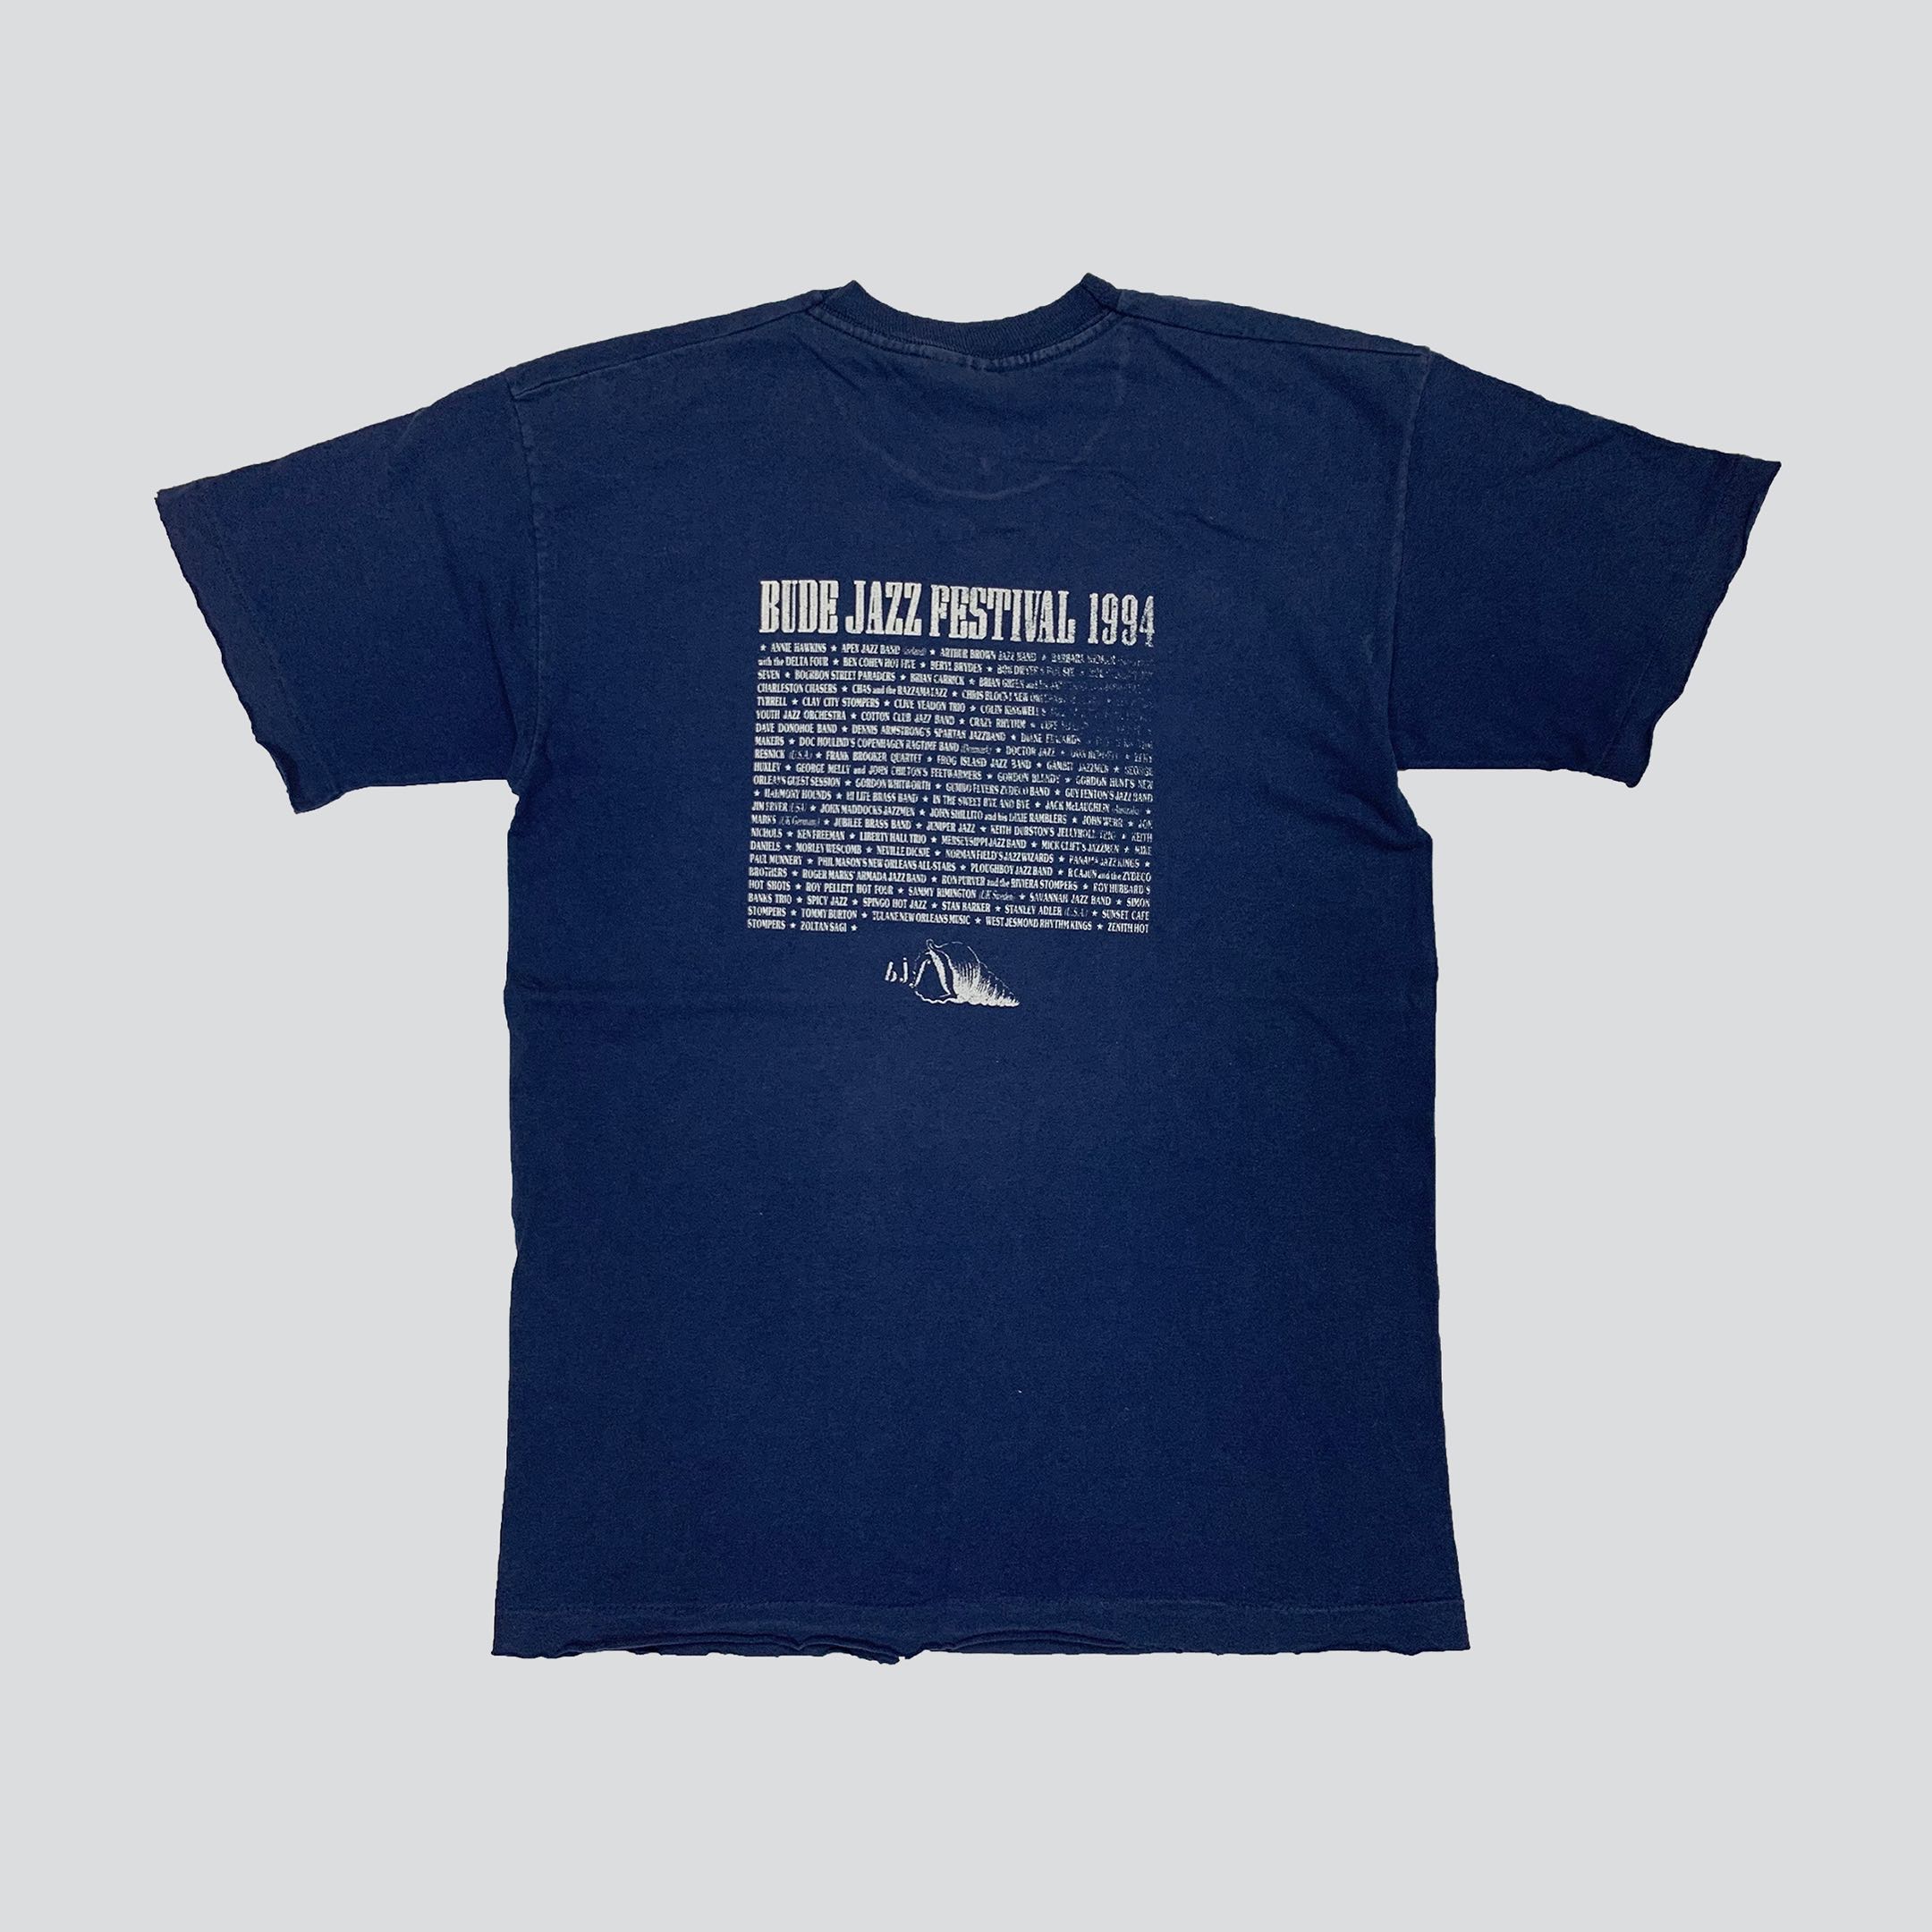 Vintage Bude Jazz Festival 1994 T ShirtSize M Single Stitch Shirt Distressed T-Shrit Men Shirt Women Shirt 90s Jazz Shirt - 2